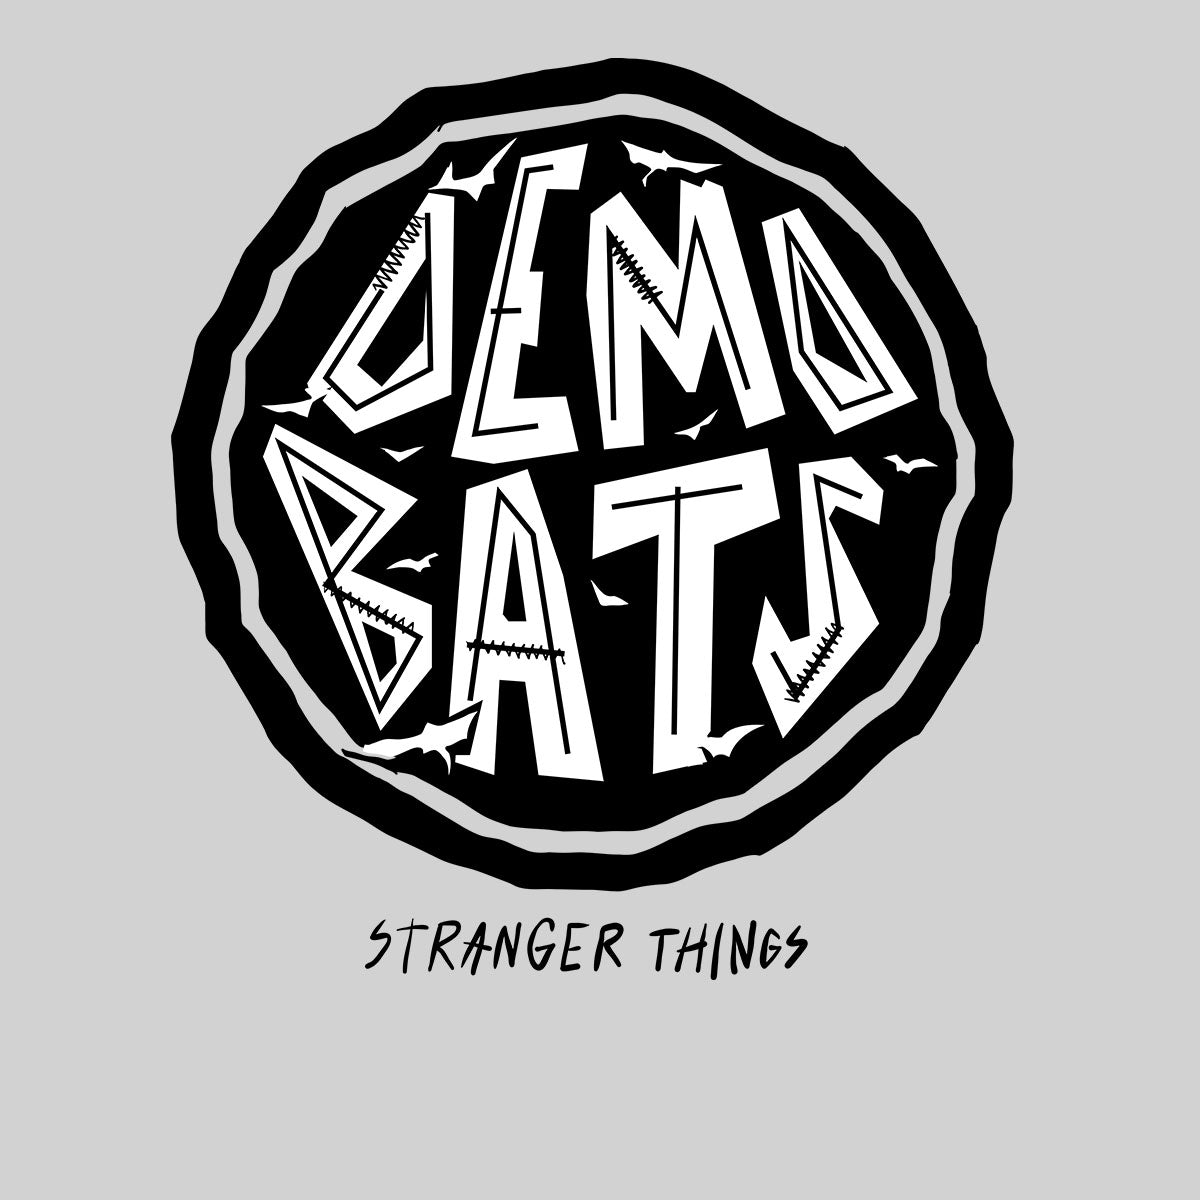 Stranger Things Demo Bats Upside down t-Shirt TV series Movie Kids T-Shirt - Kuzi Tees